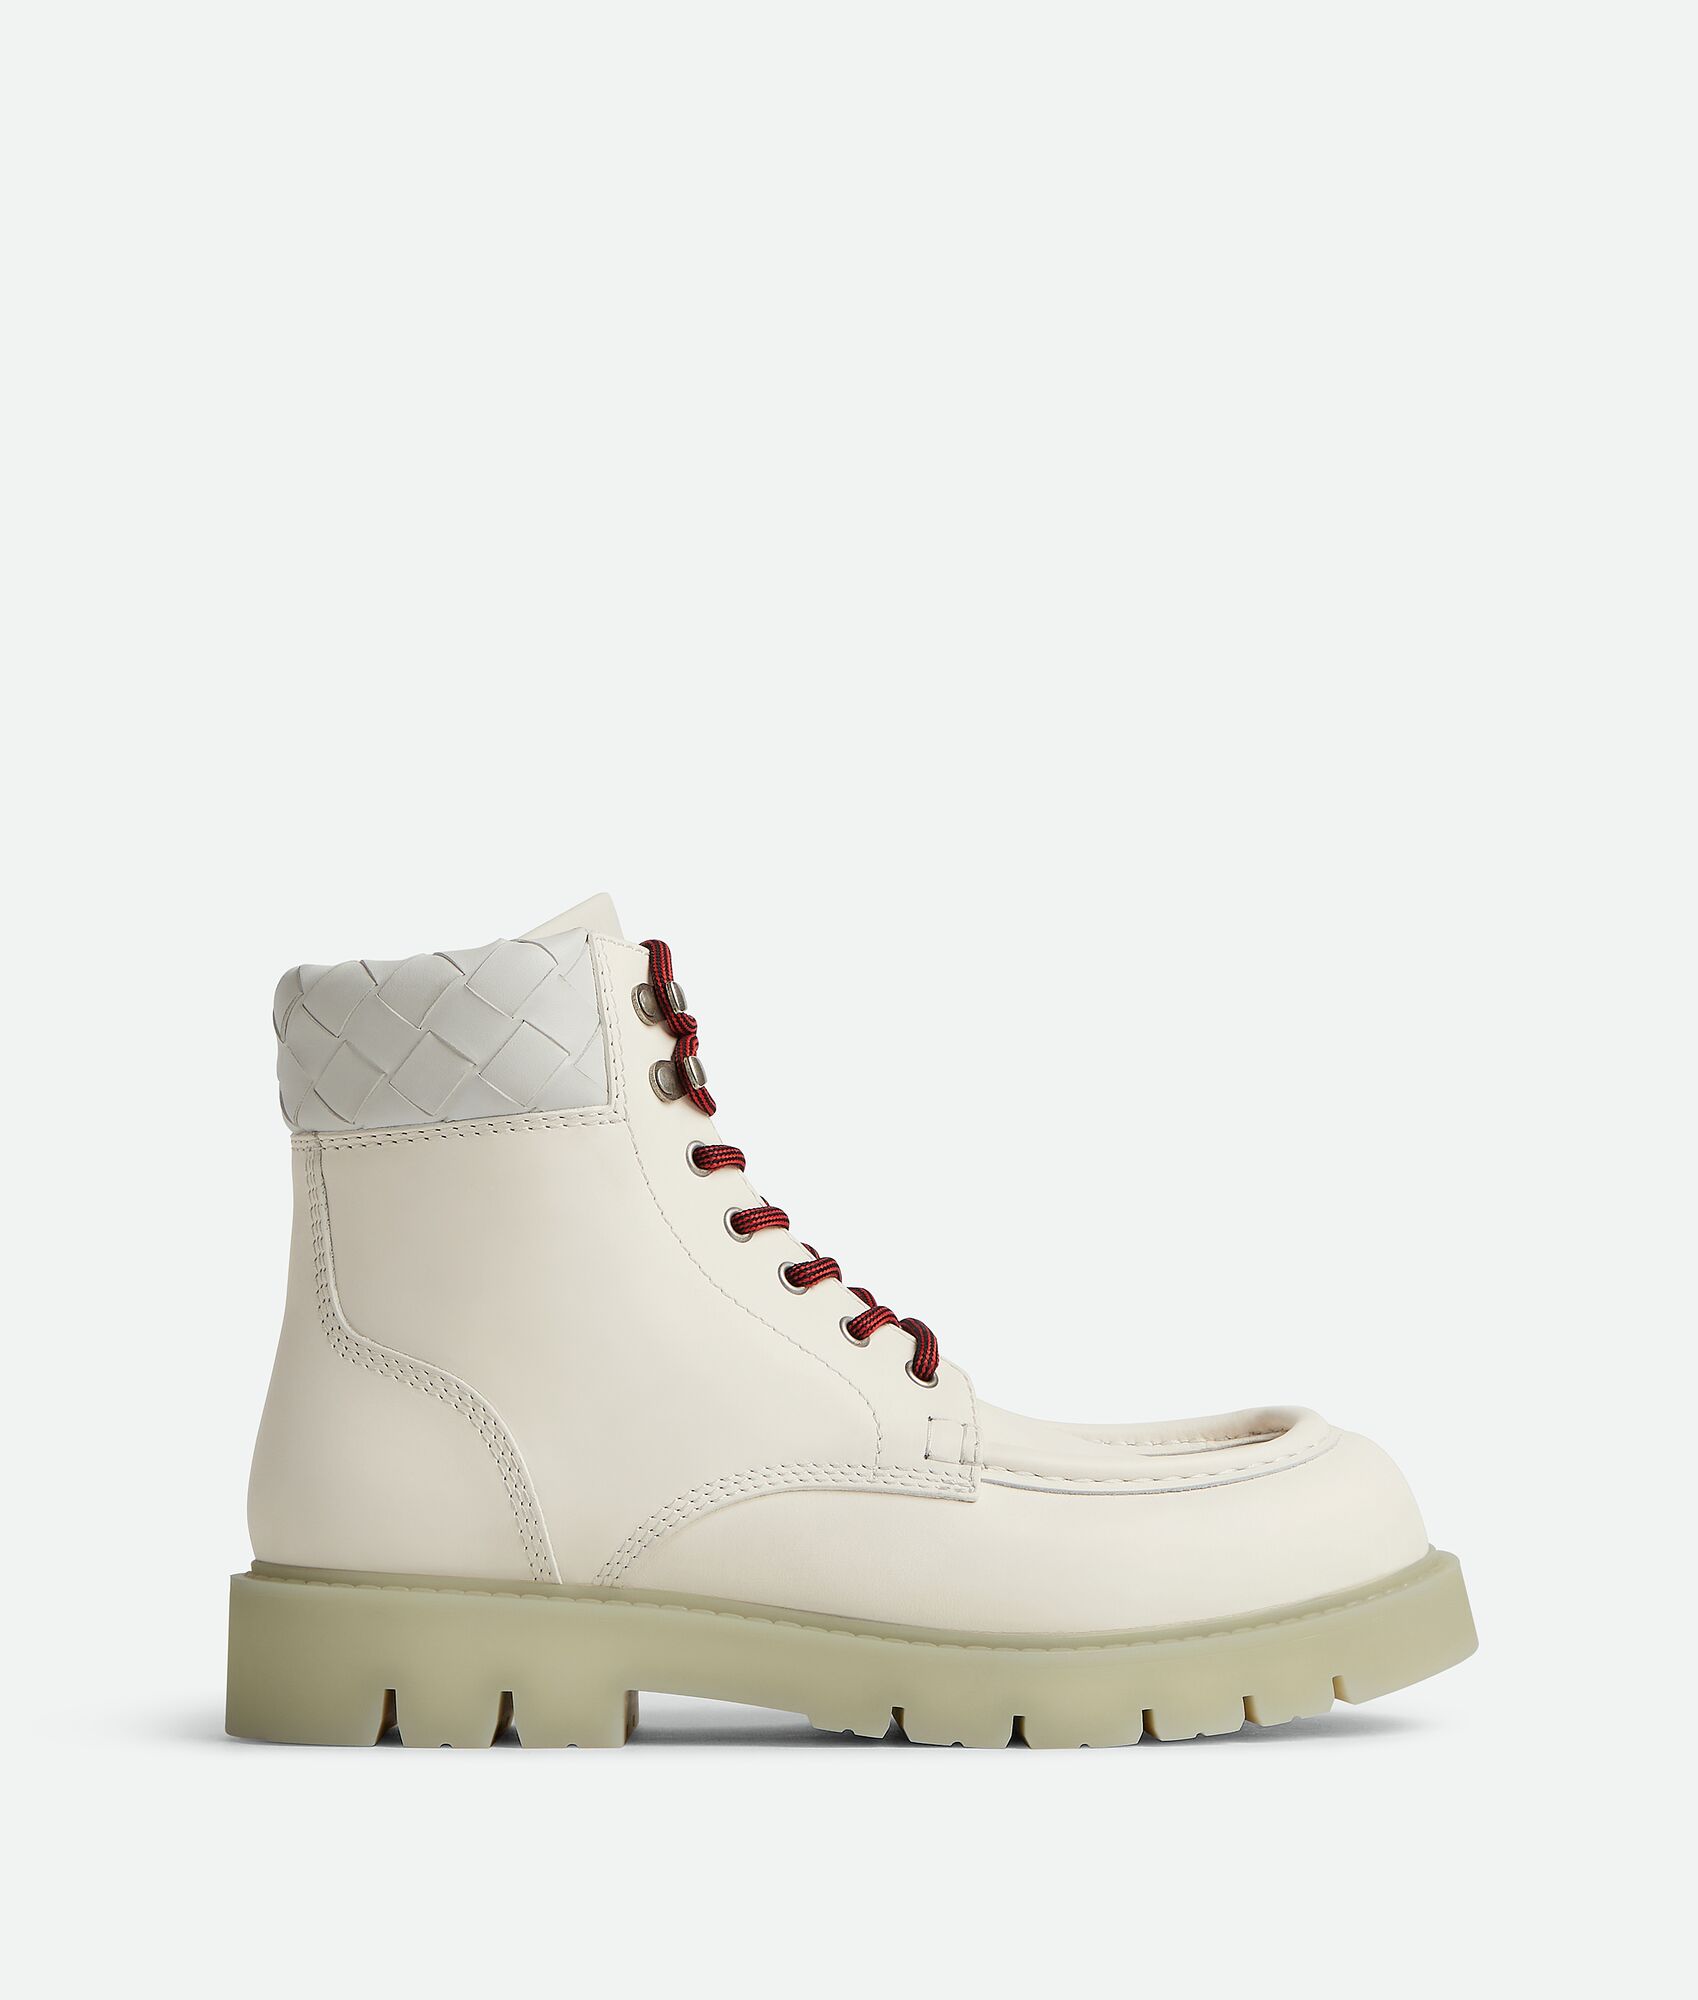 Bottega Veneta® Men's Haddock Lace-Up Ankle Boot in White. Shop online now.